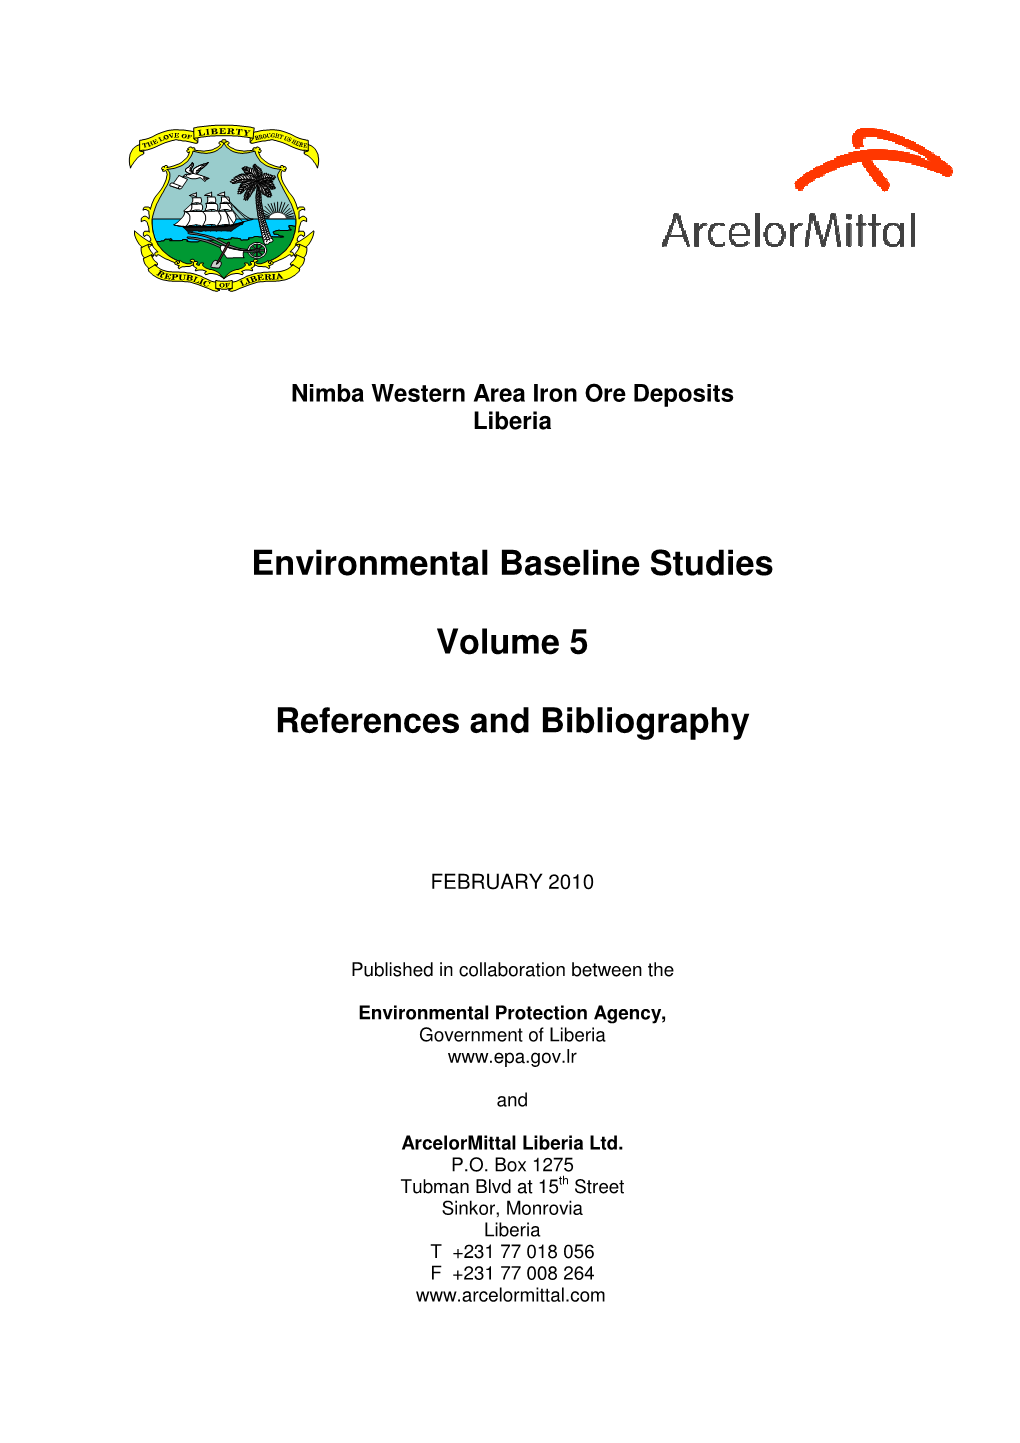 Environmental Baseline Studies Volume 5 References And